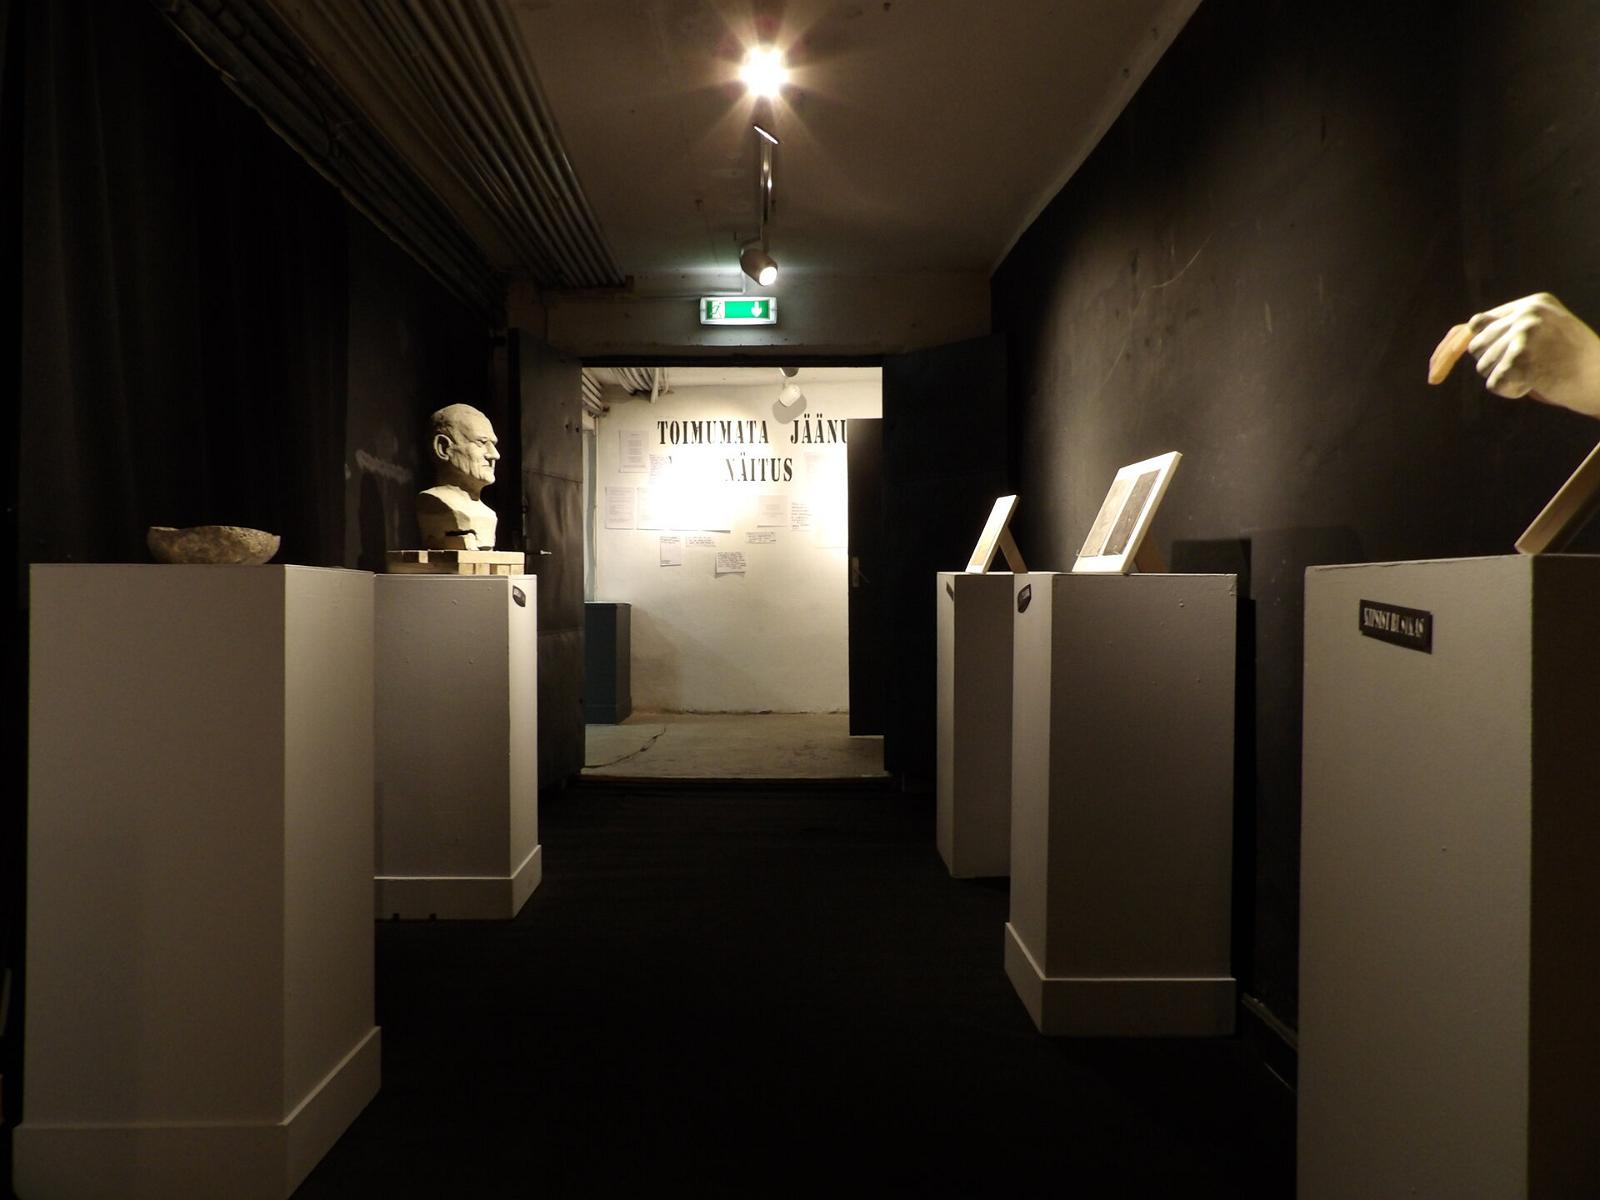 Gallery Pallas - Aiti Valk. "An exhibition never held"